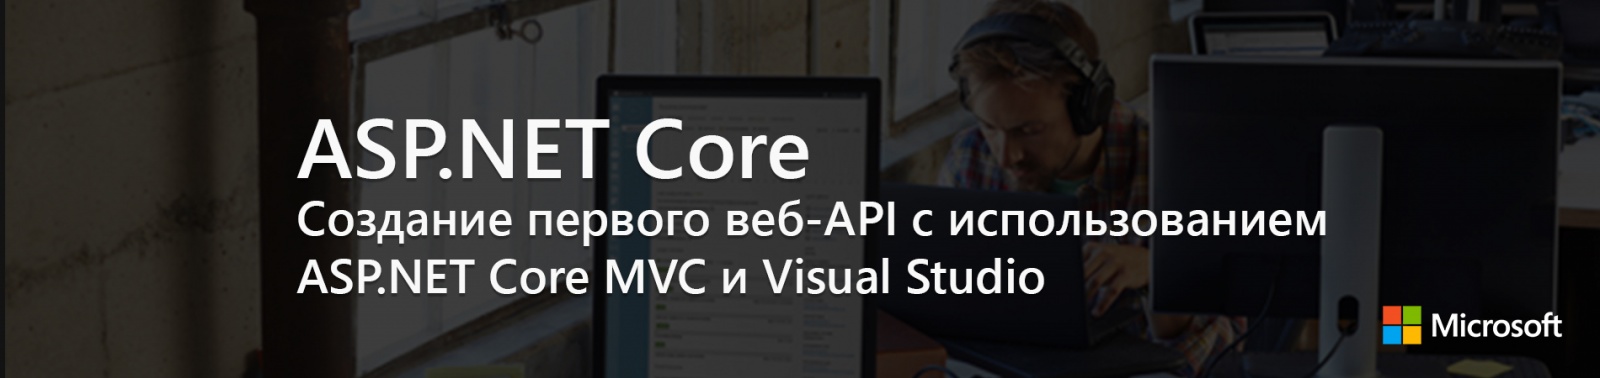 ASP.NET Core: Создание первого веб-API с использованием ASP.NET Core MVC и Visual Studio - 1